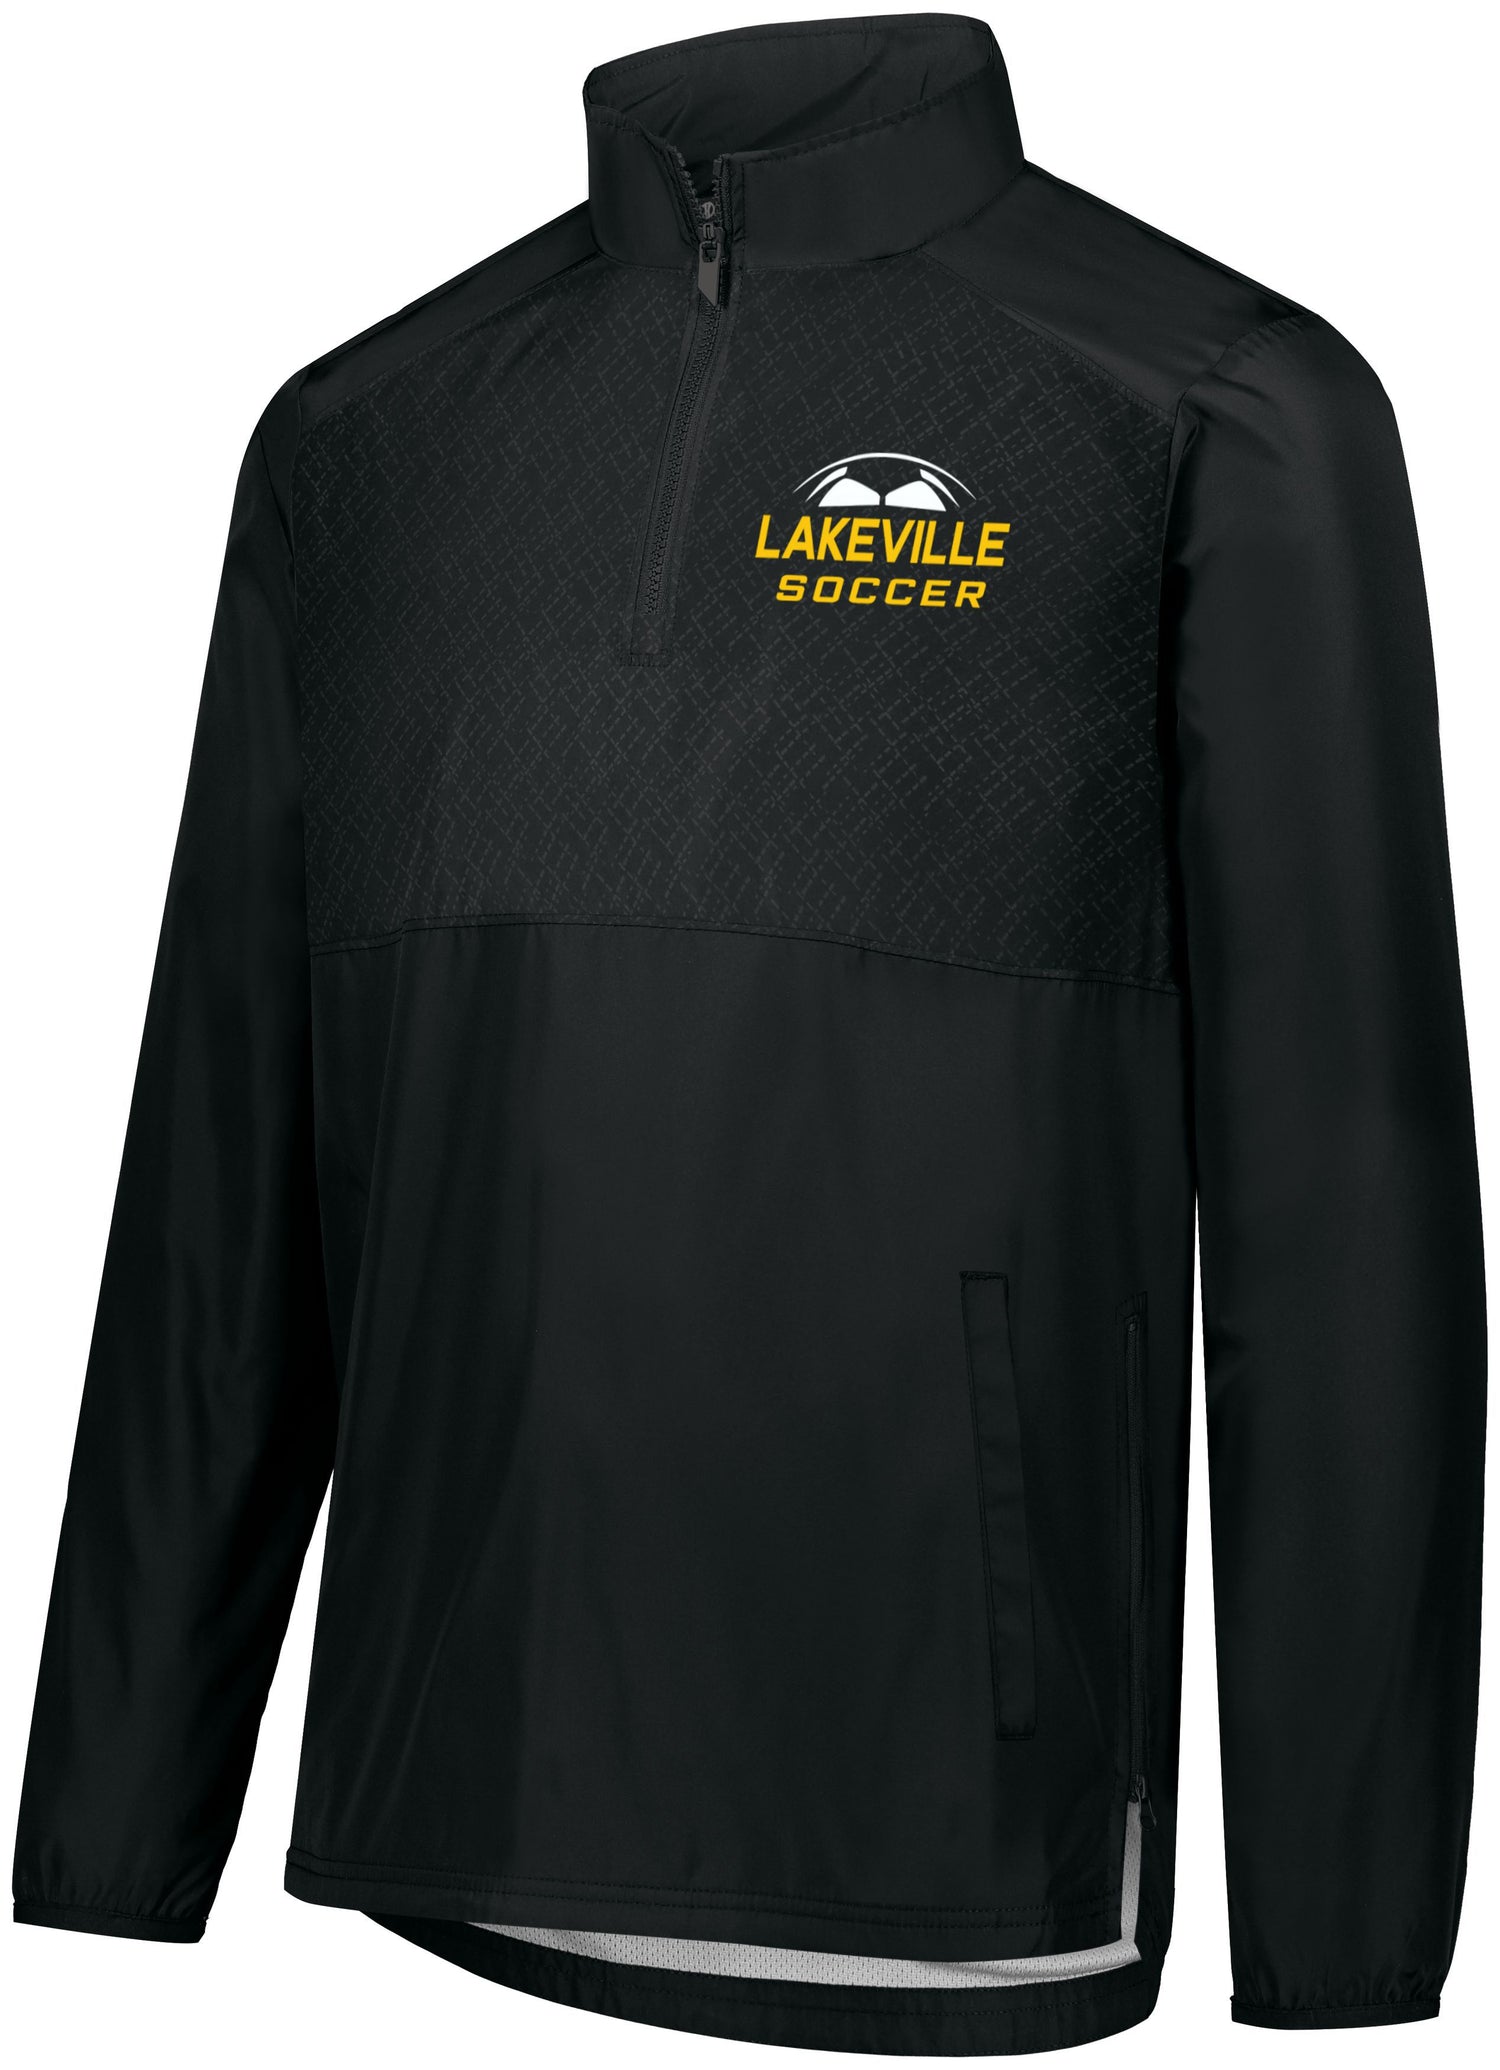 Lakeville Soccer